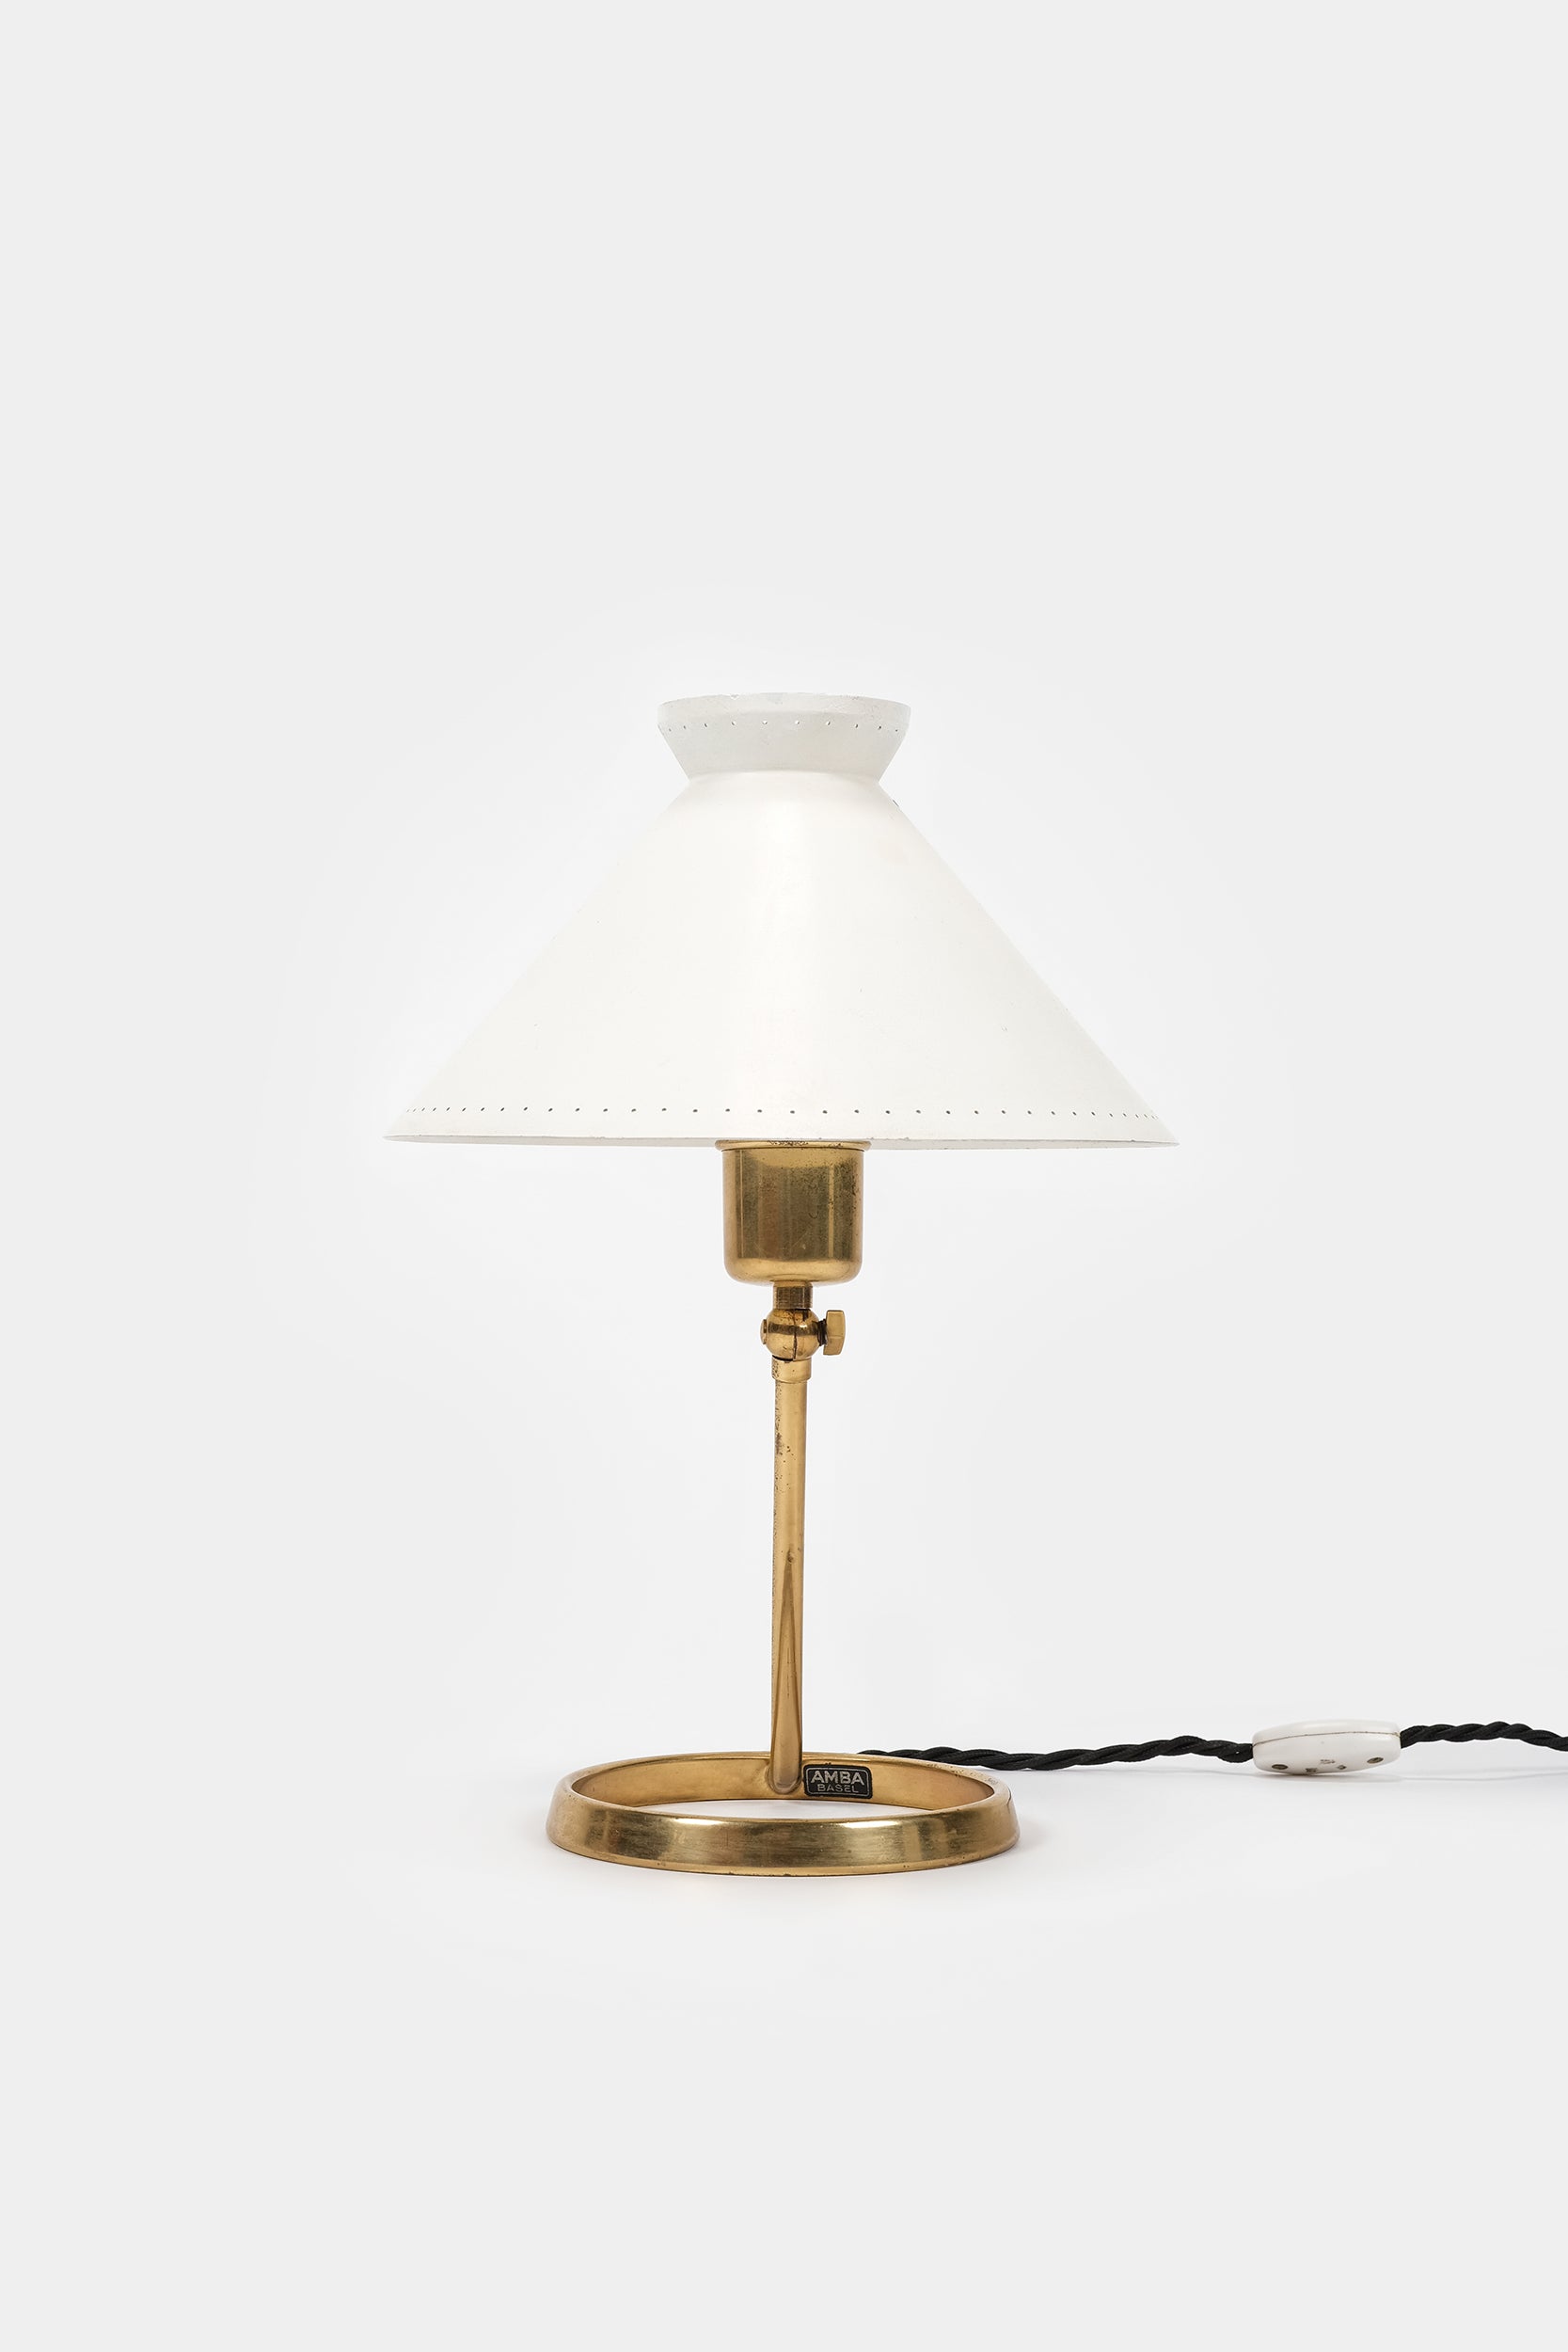 Alfred Müller, Pair Brass Lamps, Amba, Switzerland, 40s